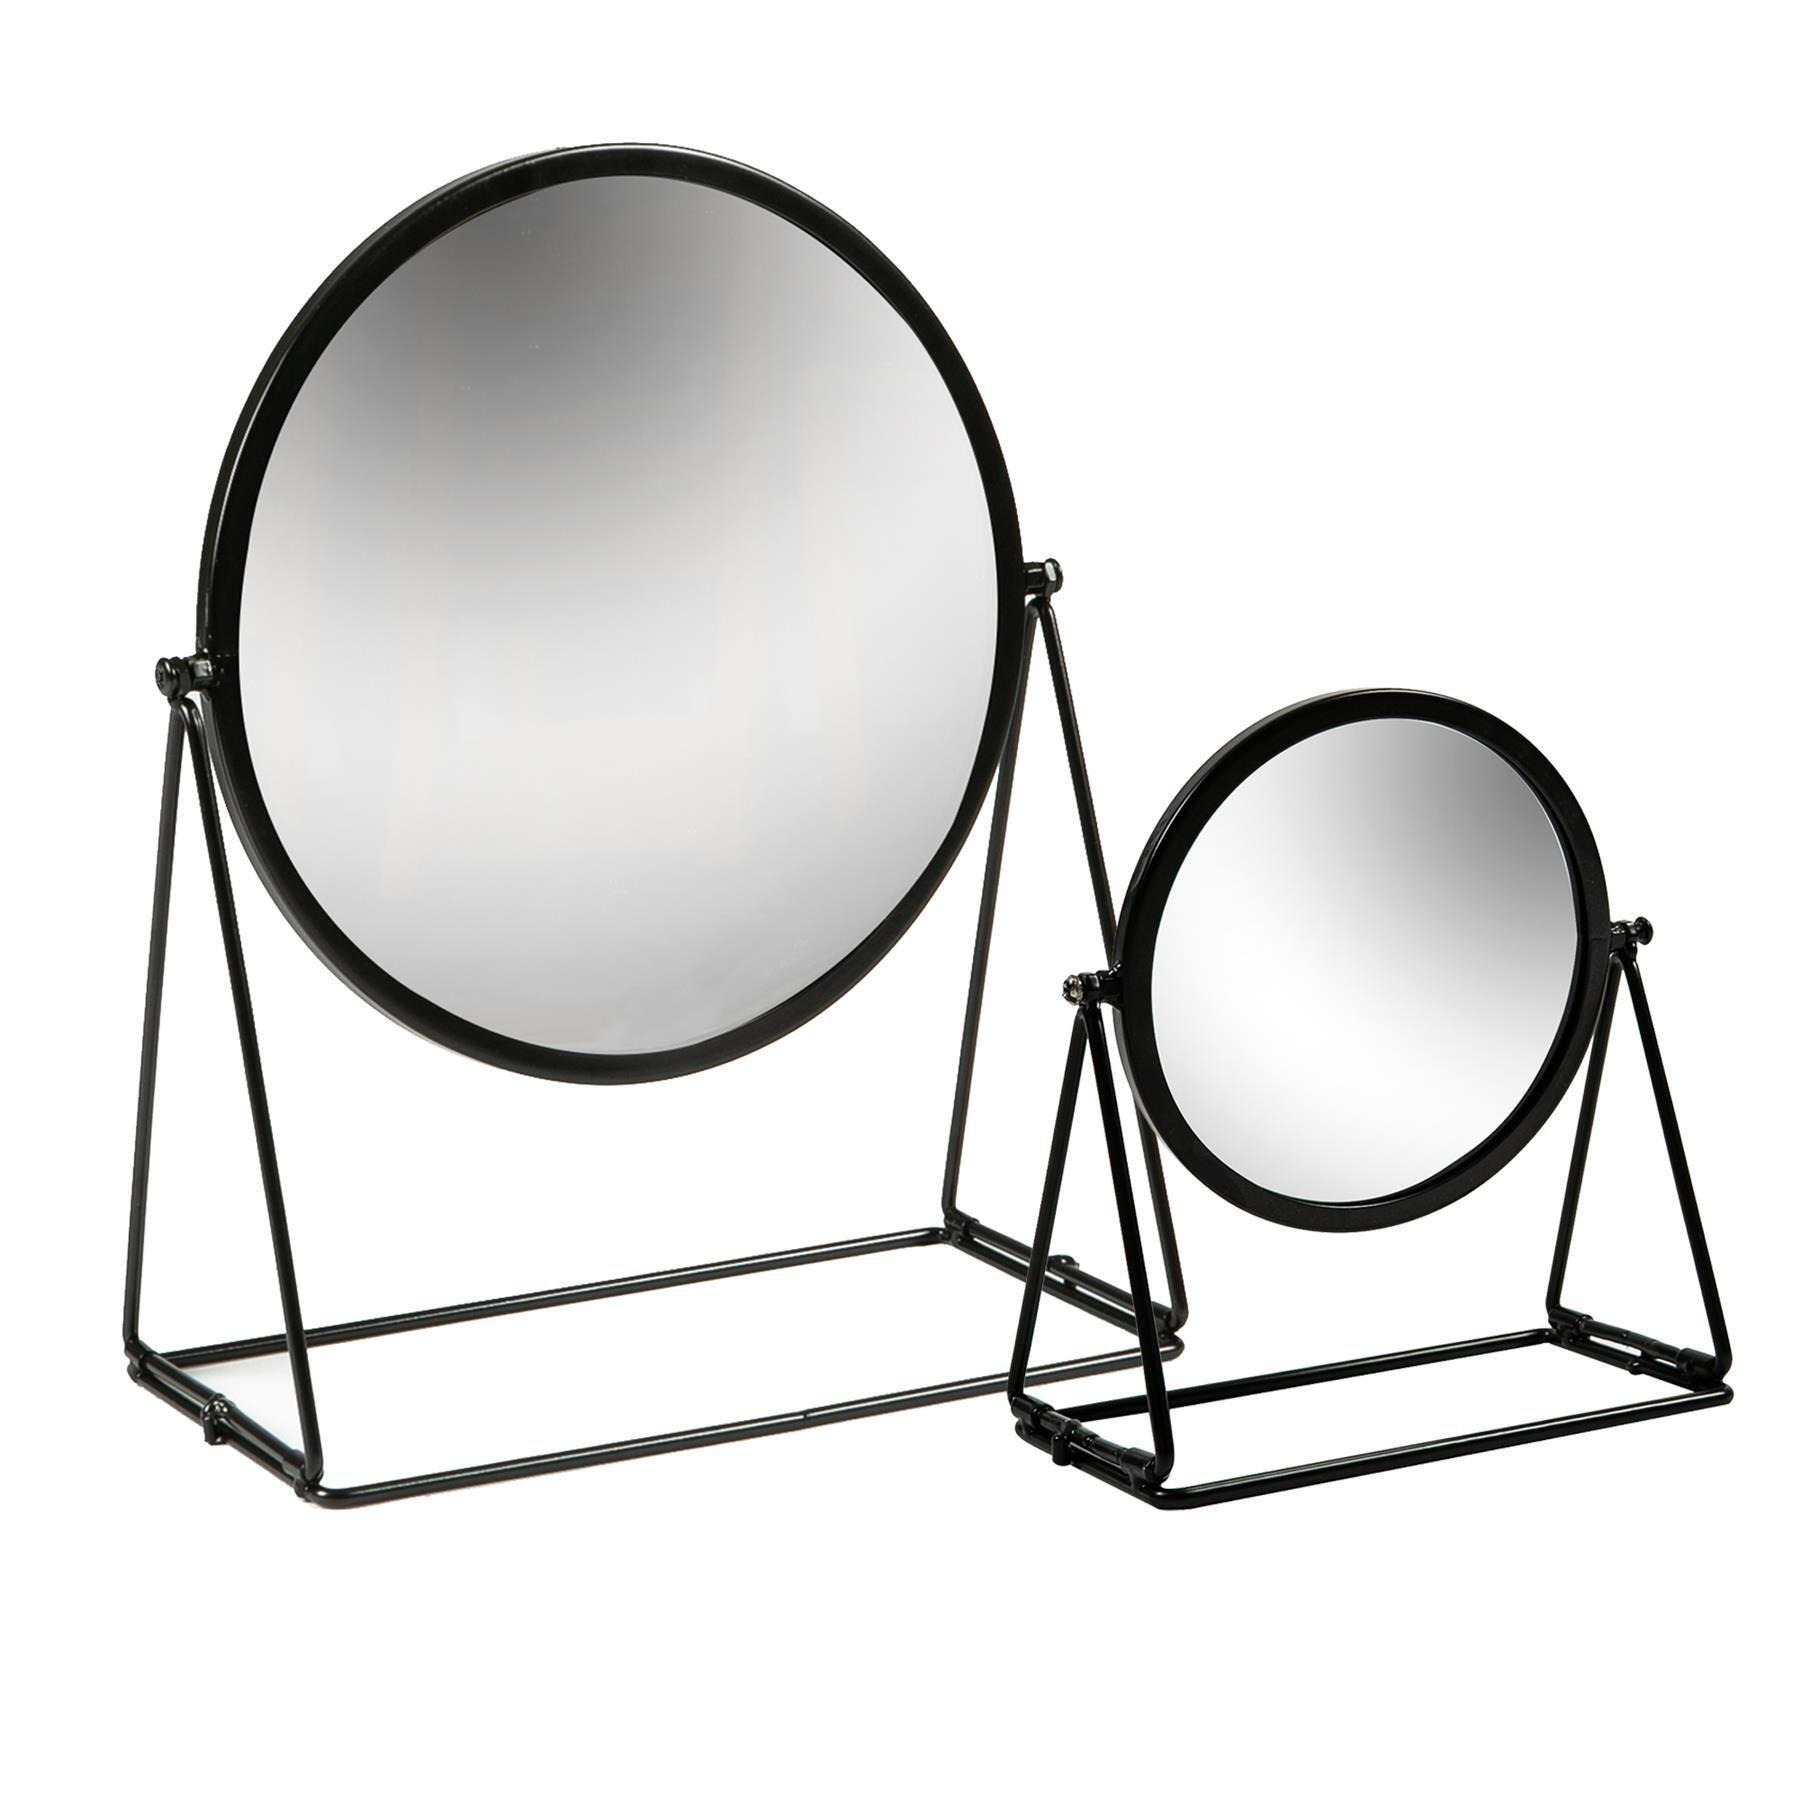 2 Piece Round Dressing Table Mirror Set - 2 Sizes - Black - image 1